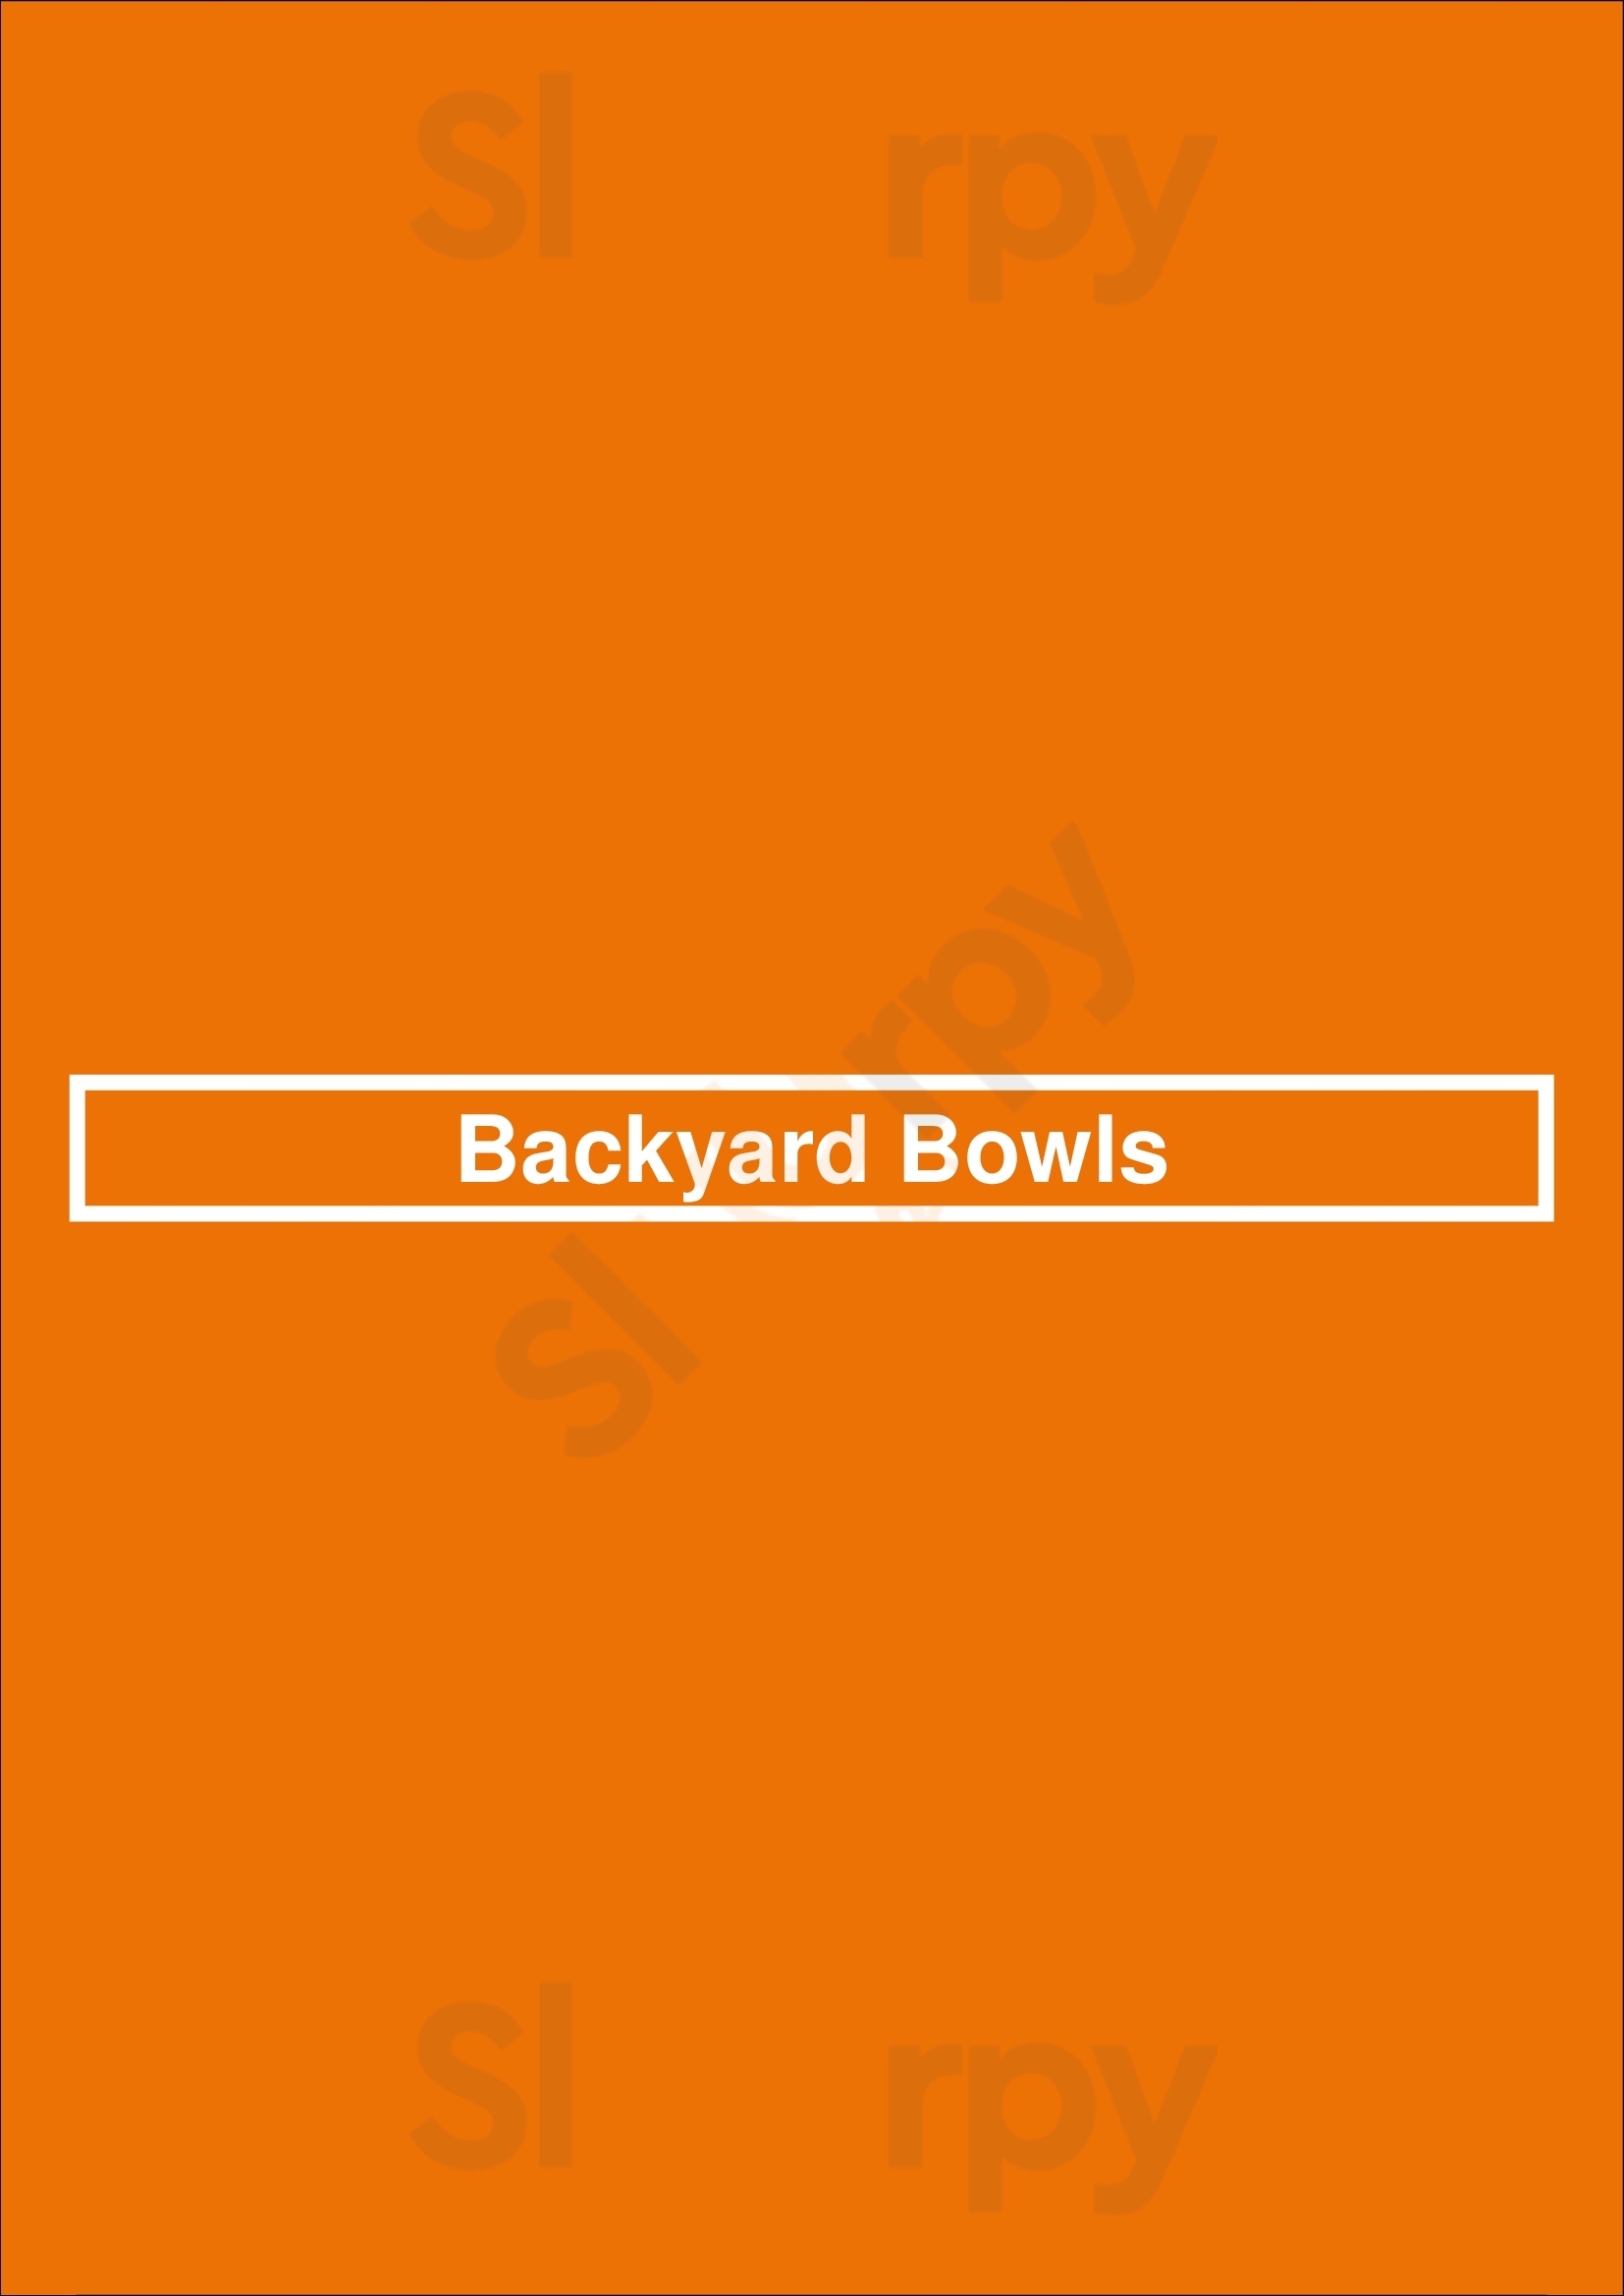 Backyard Bowls Los Angeles Menu - 1